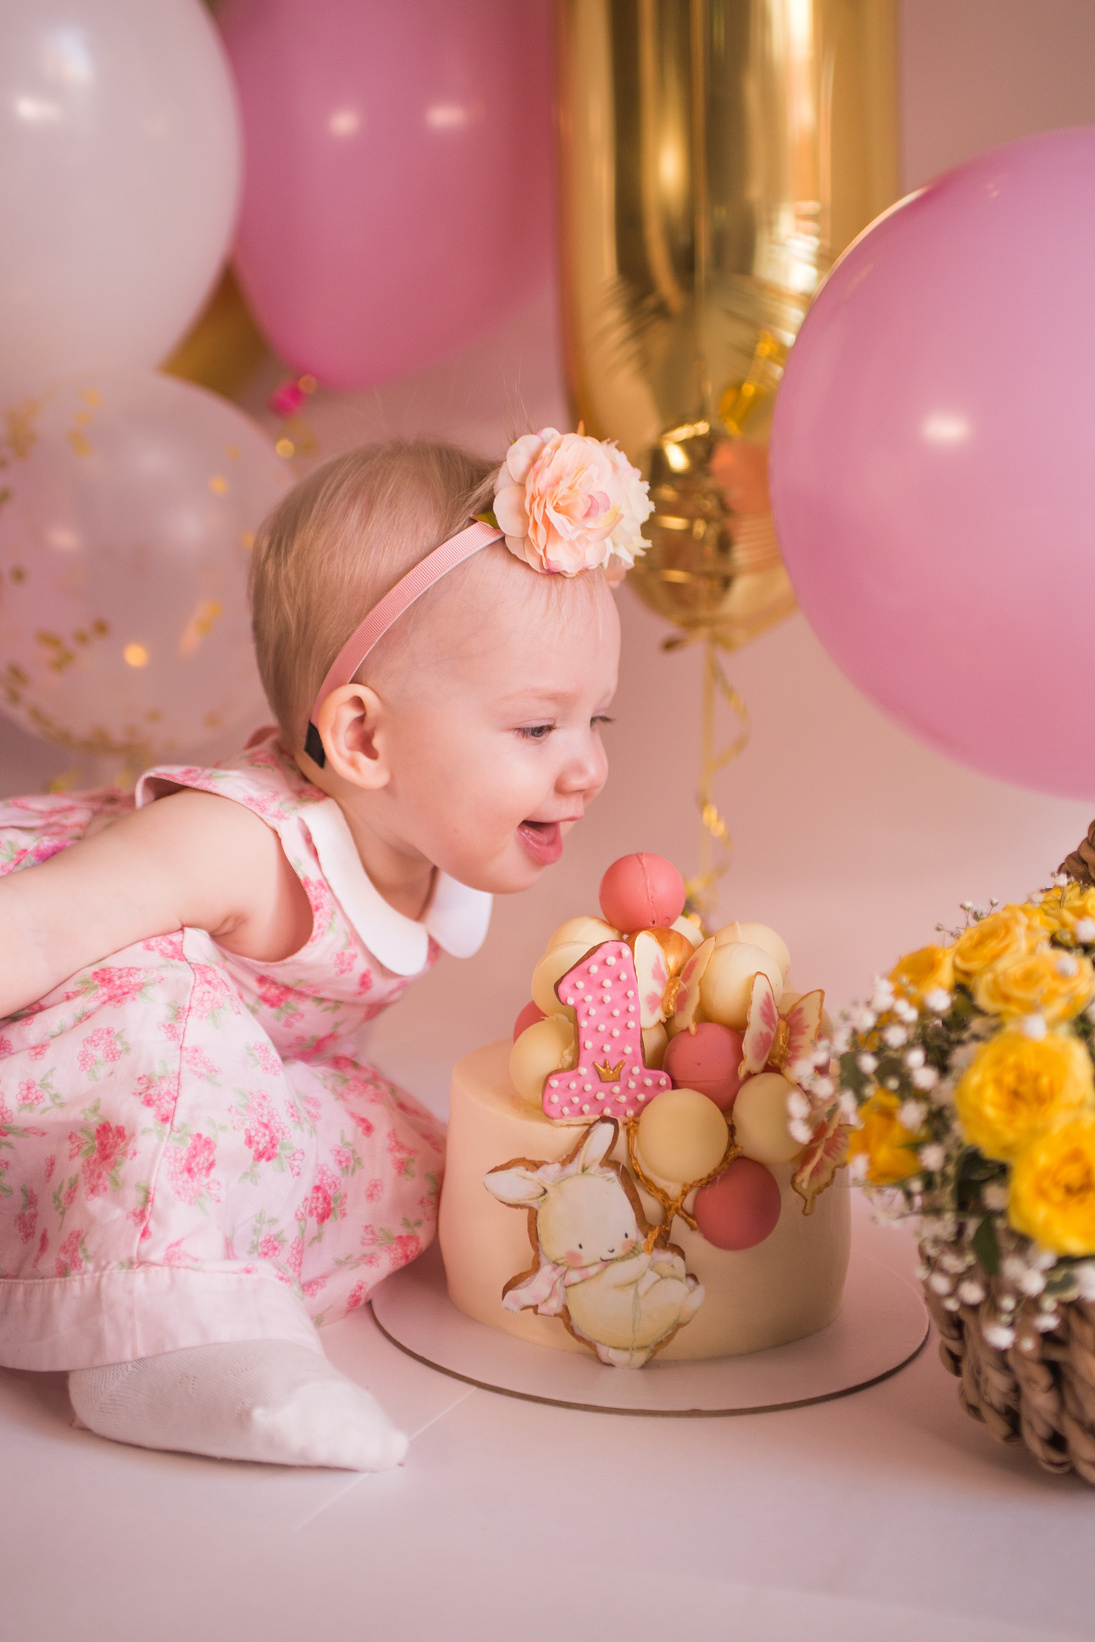 Baby Girl with Birthday Cake